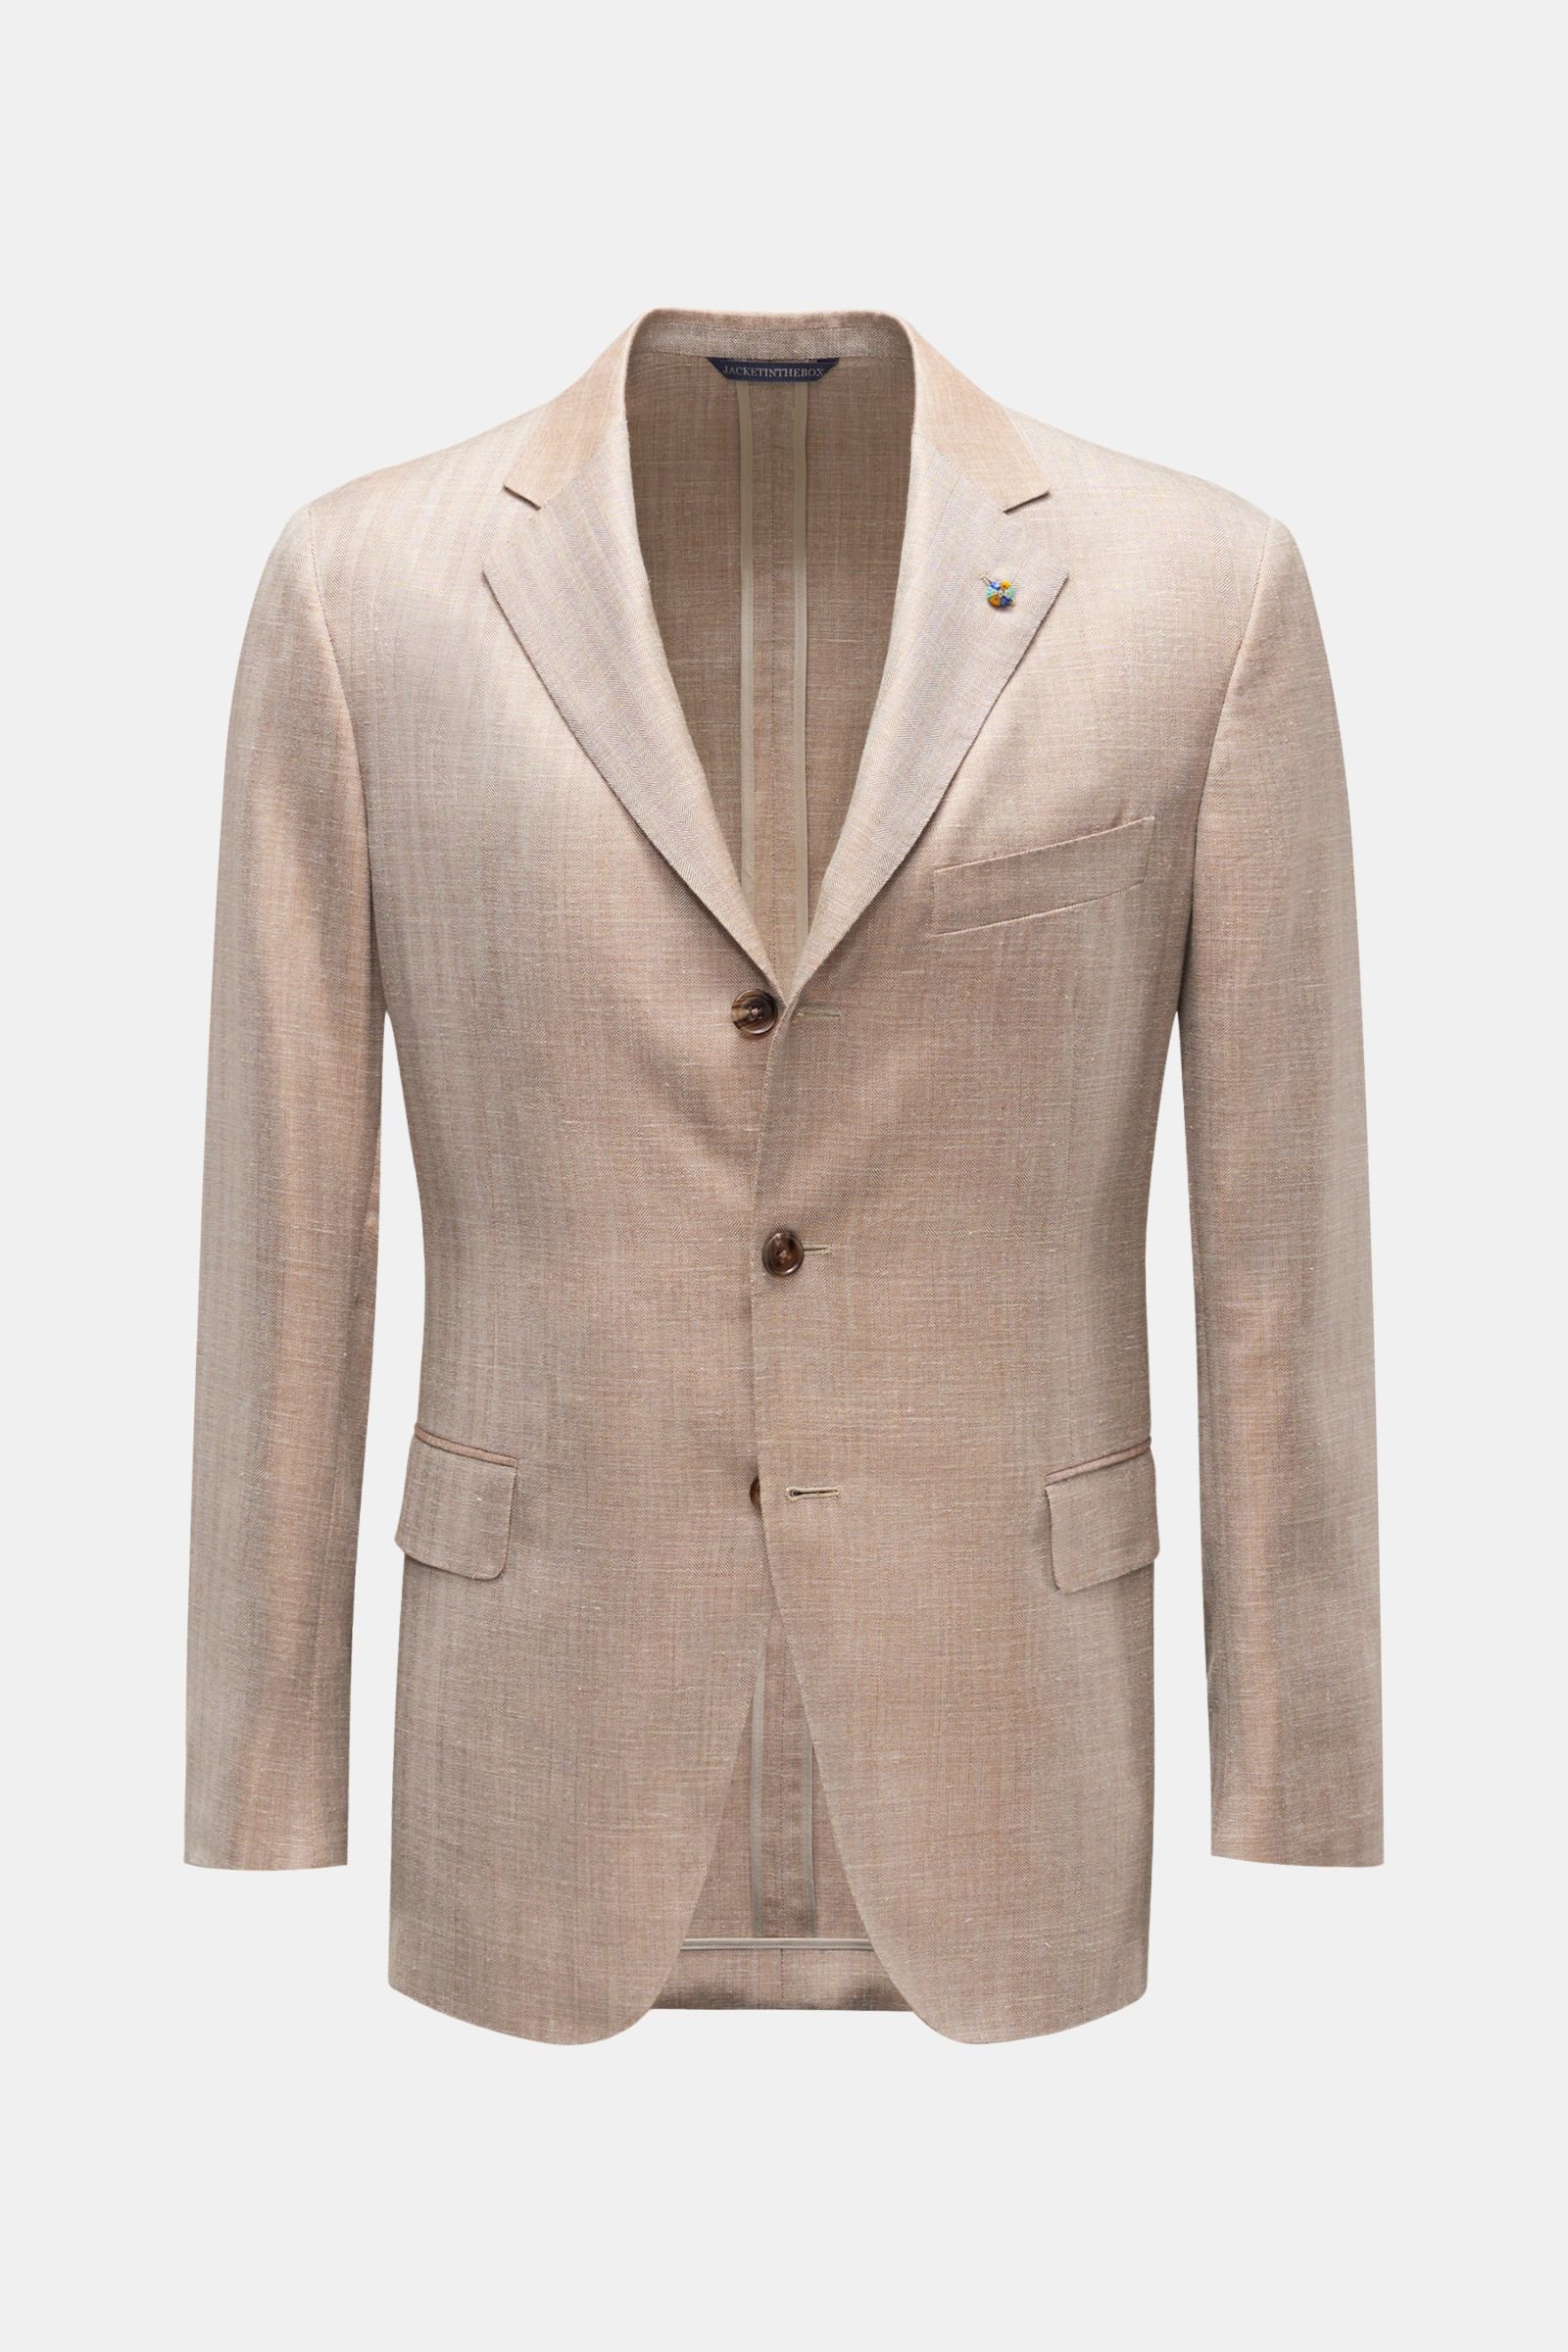 Smart-casual jacket beige patterned